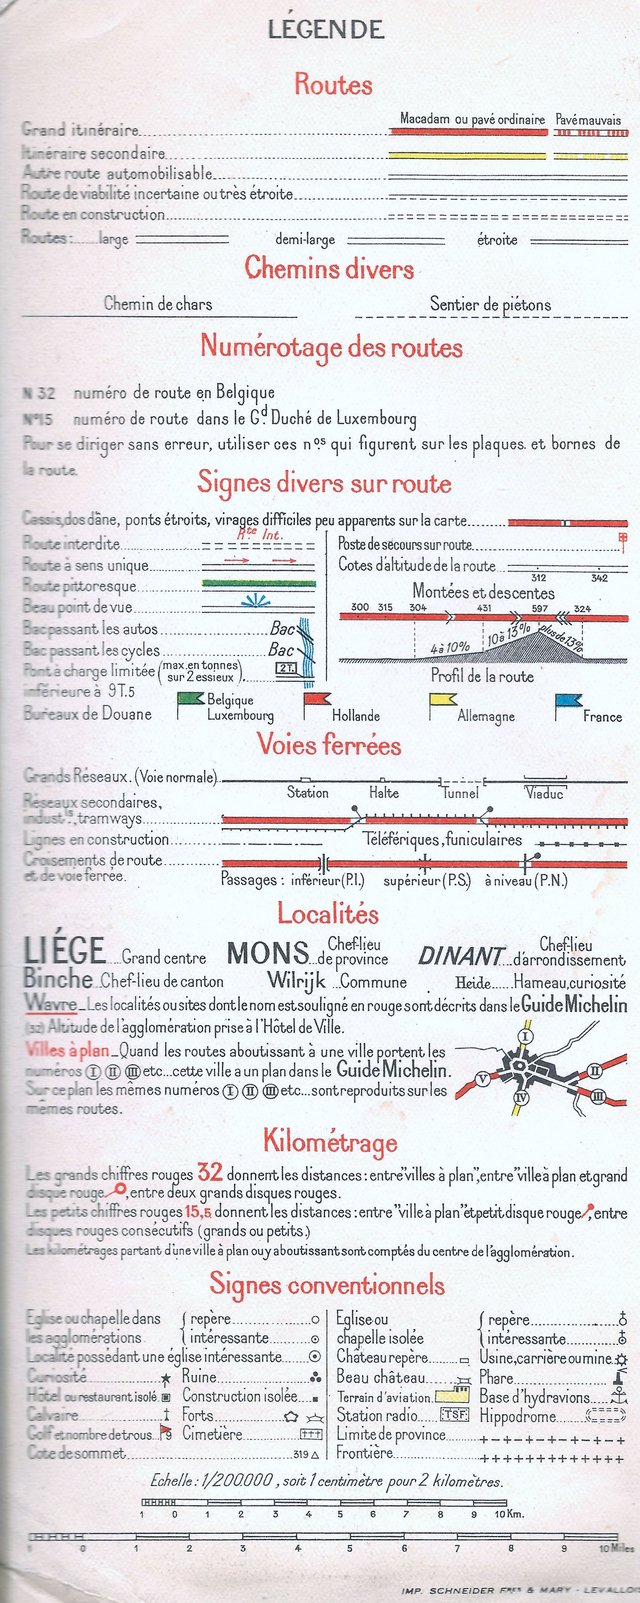 Legend or key of a Belgian road map (Michelin 1940)